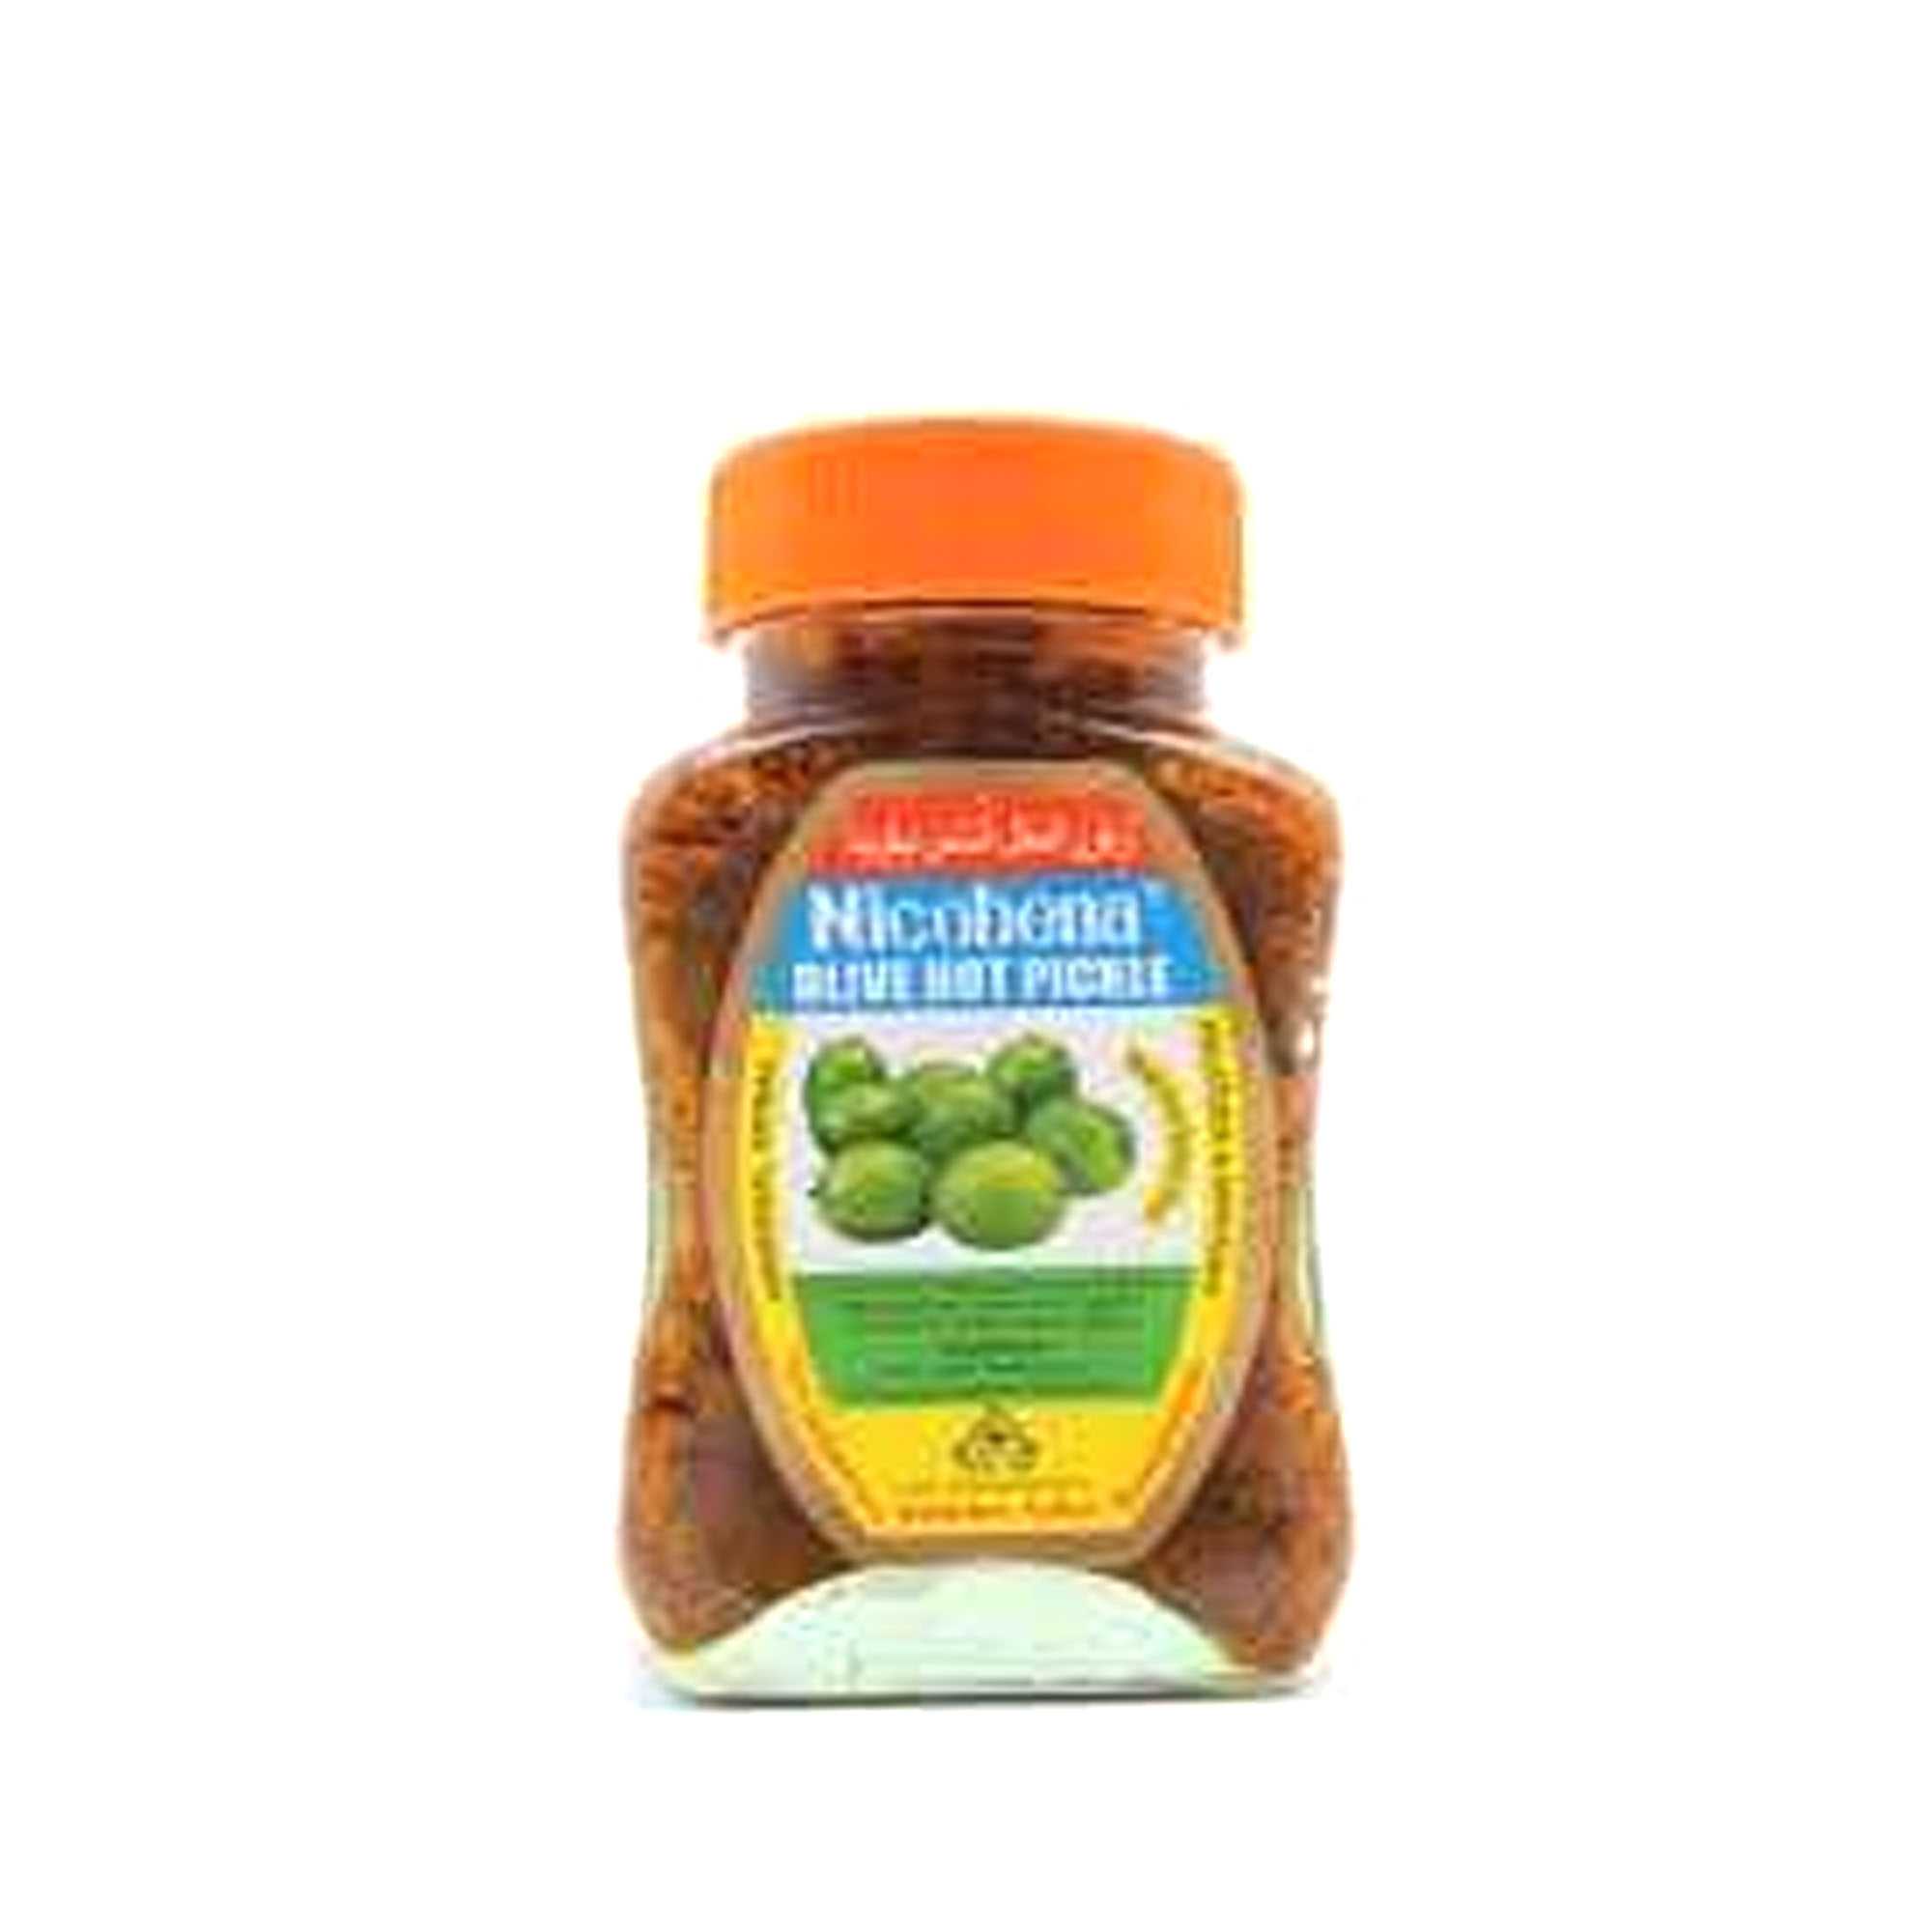 Nicobena Olive Hot Pickle 300g